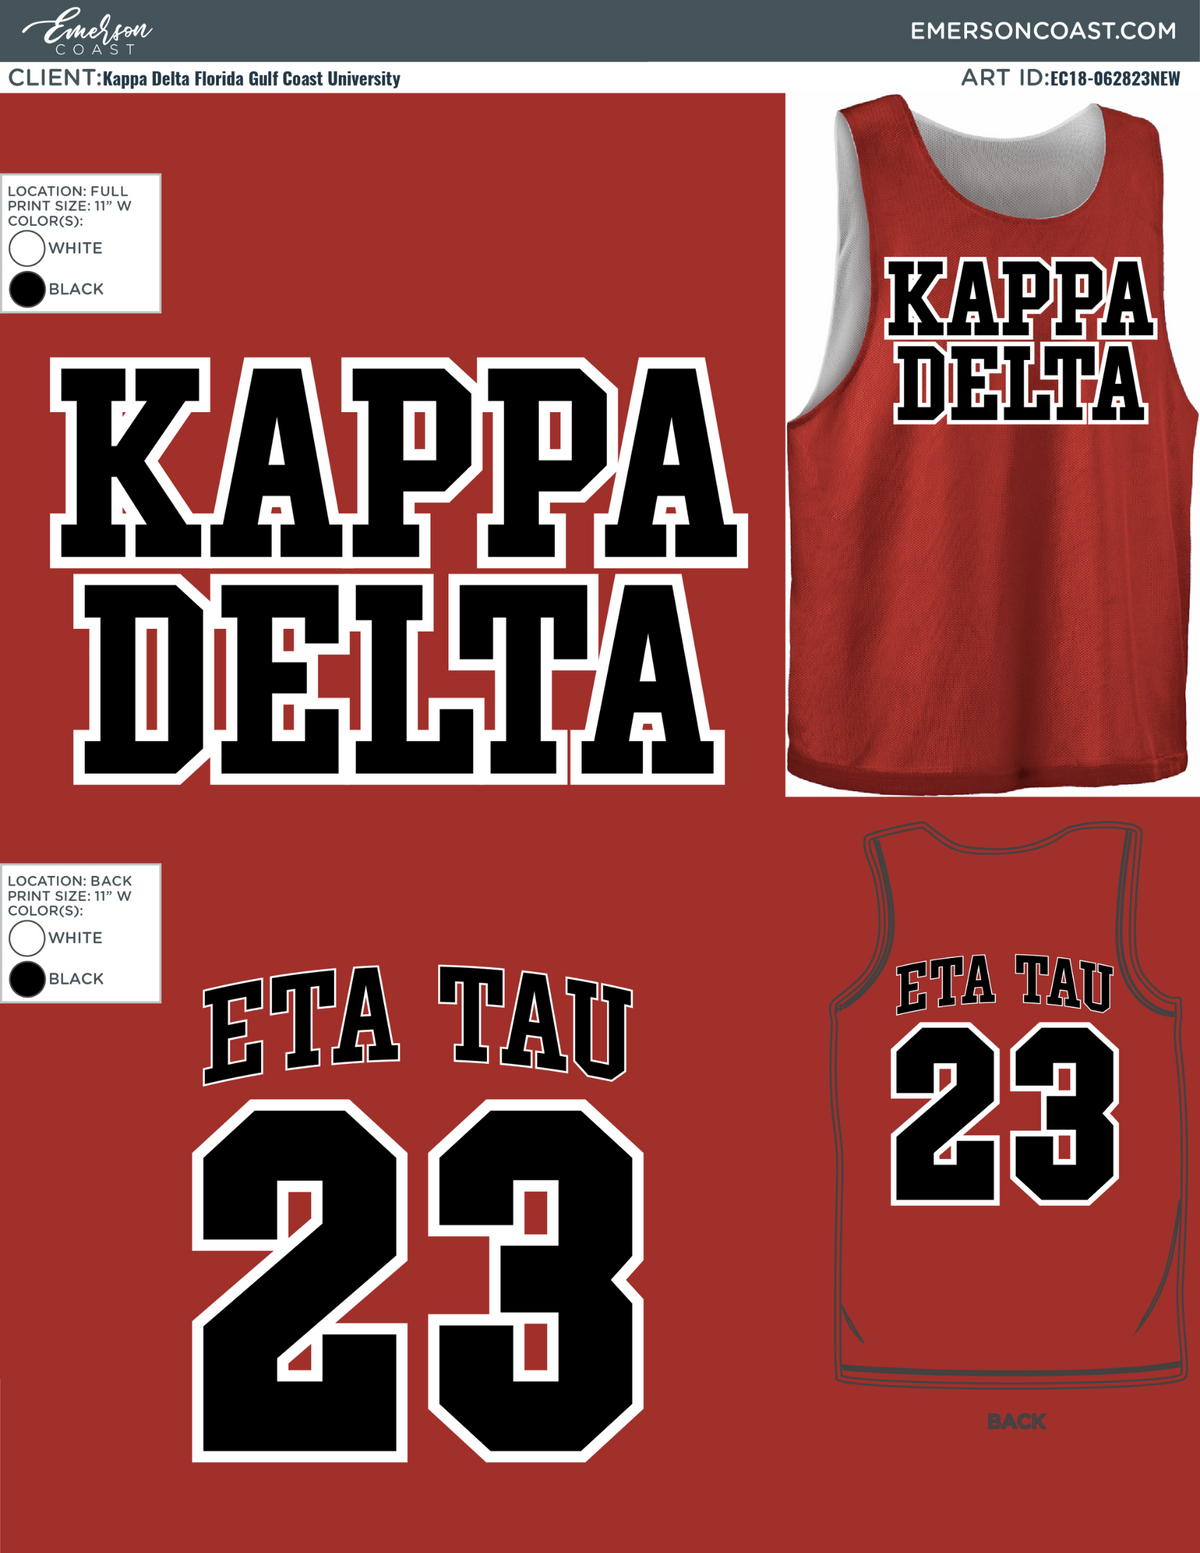 Kappa Delta Jordan Year Bid Day Basketball Jerseys